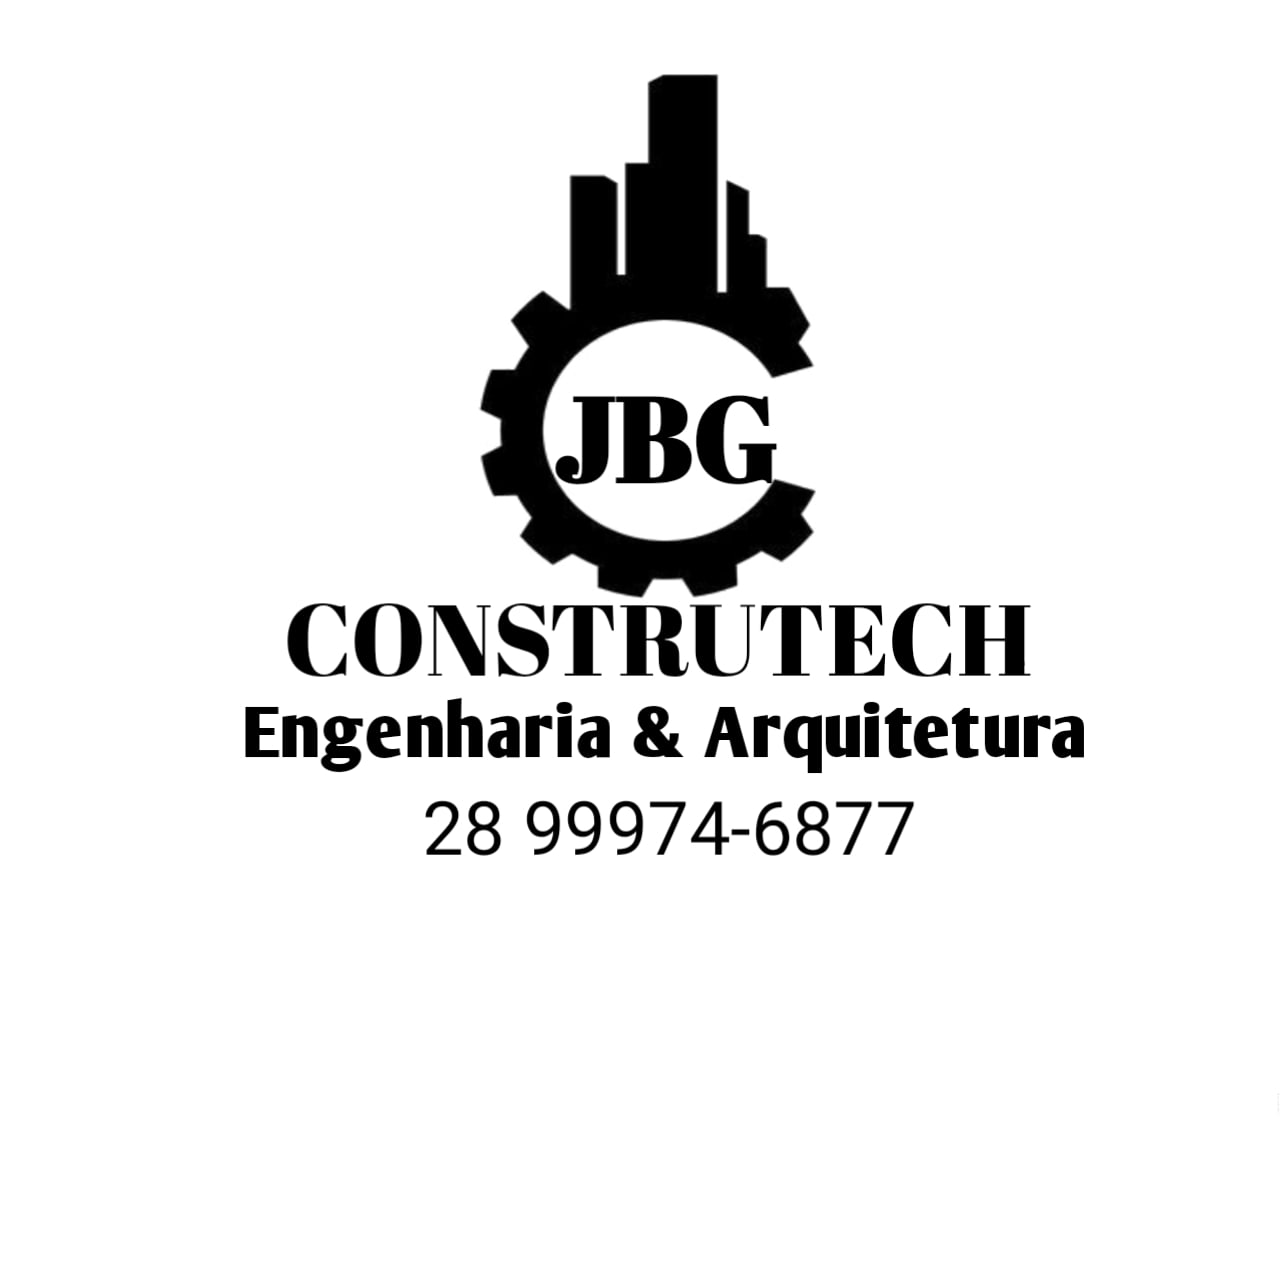 JBG engenharia